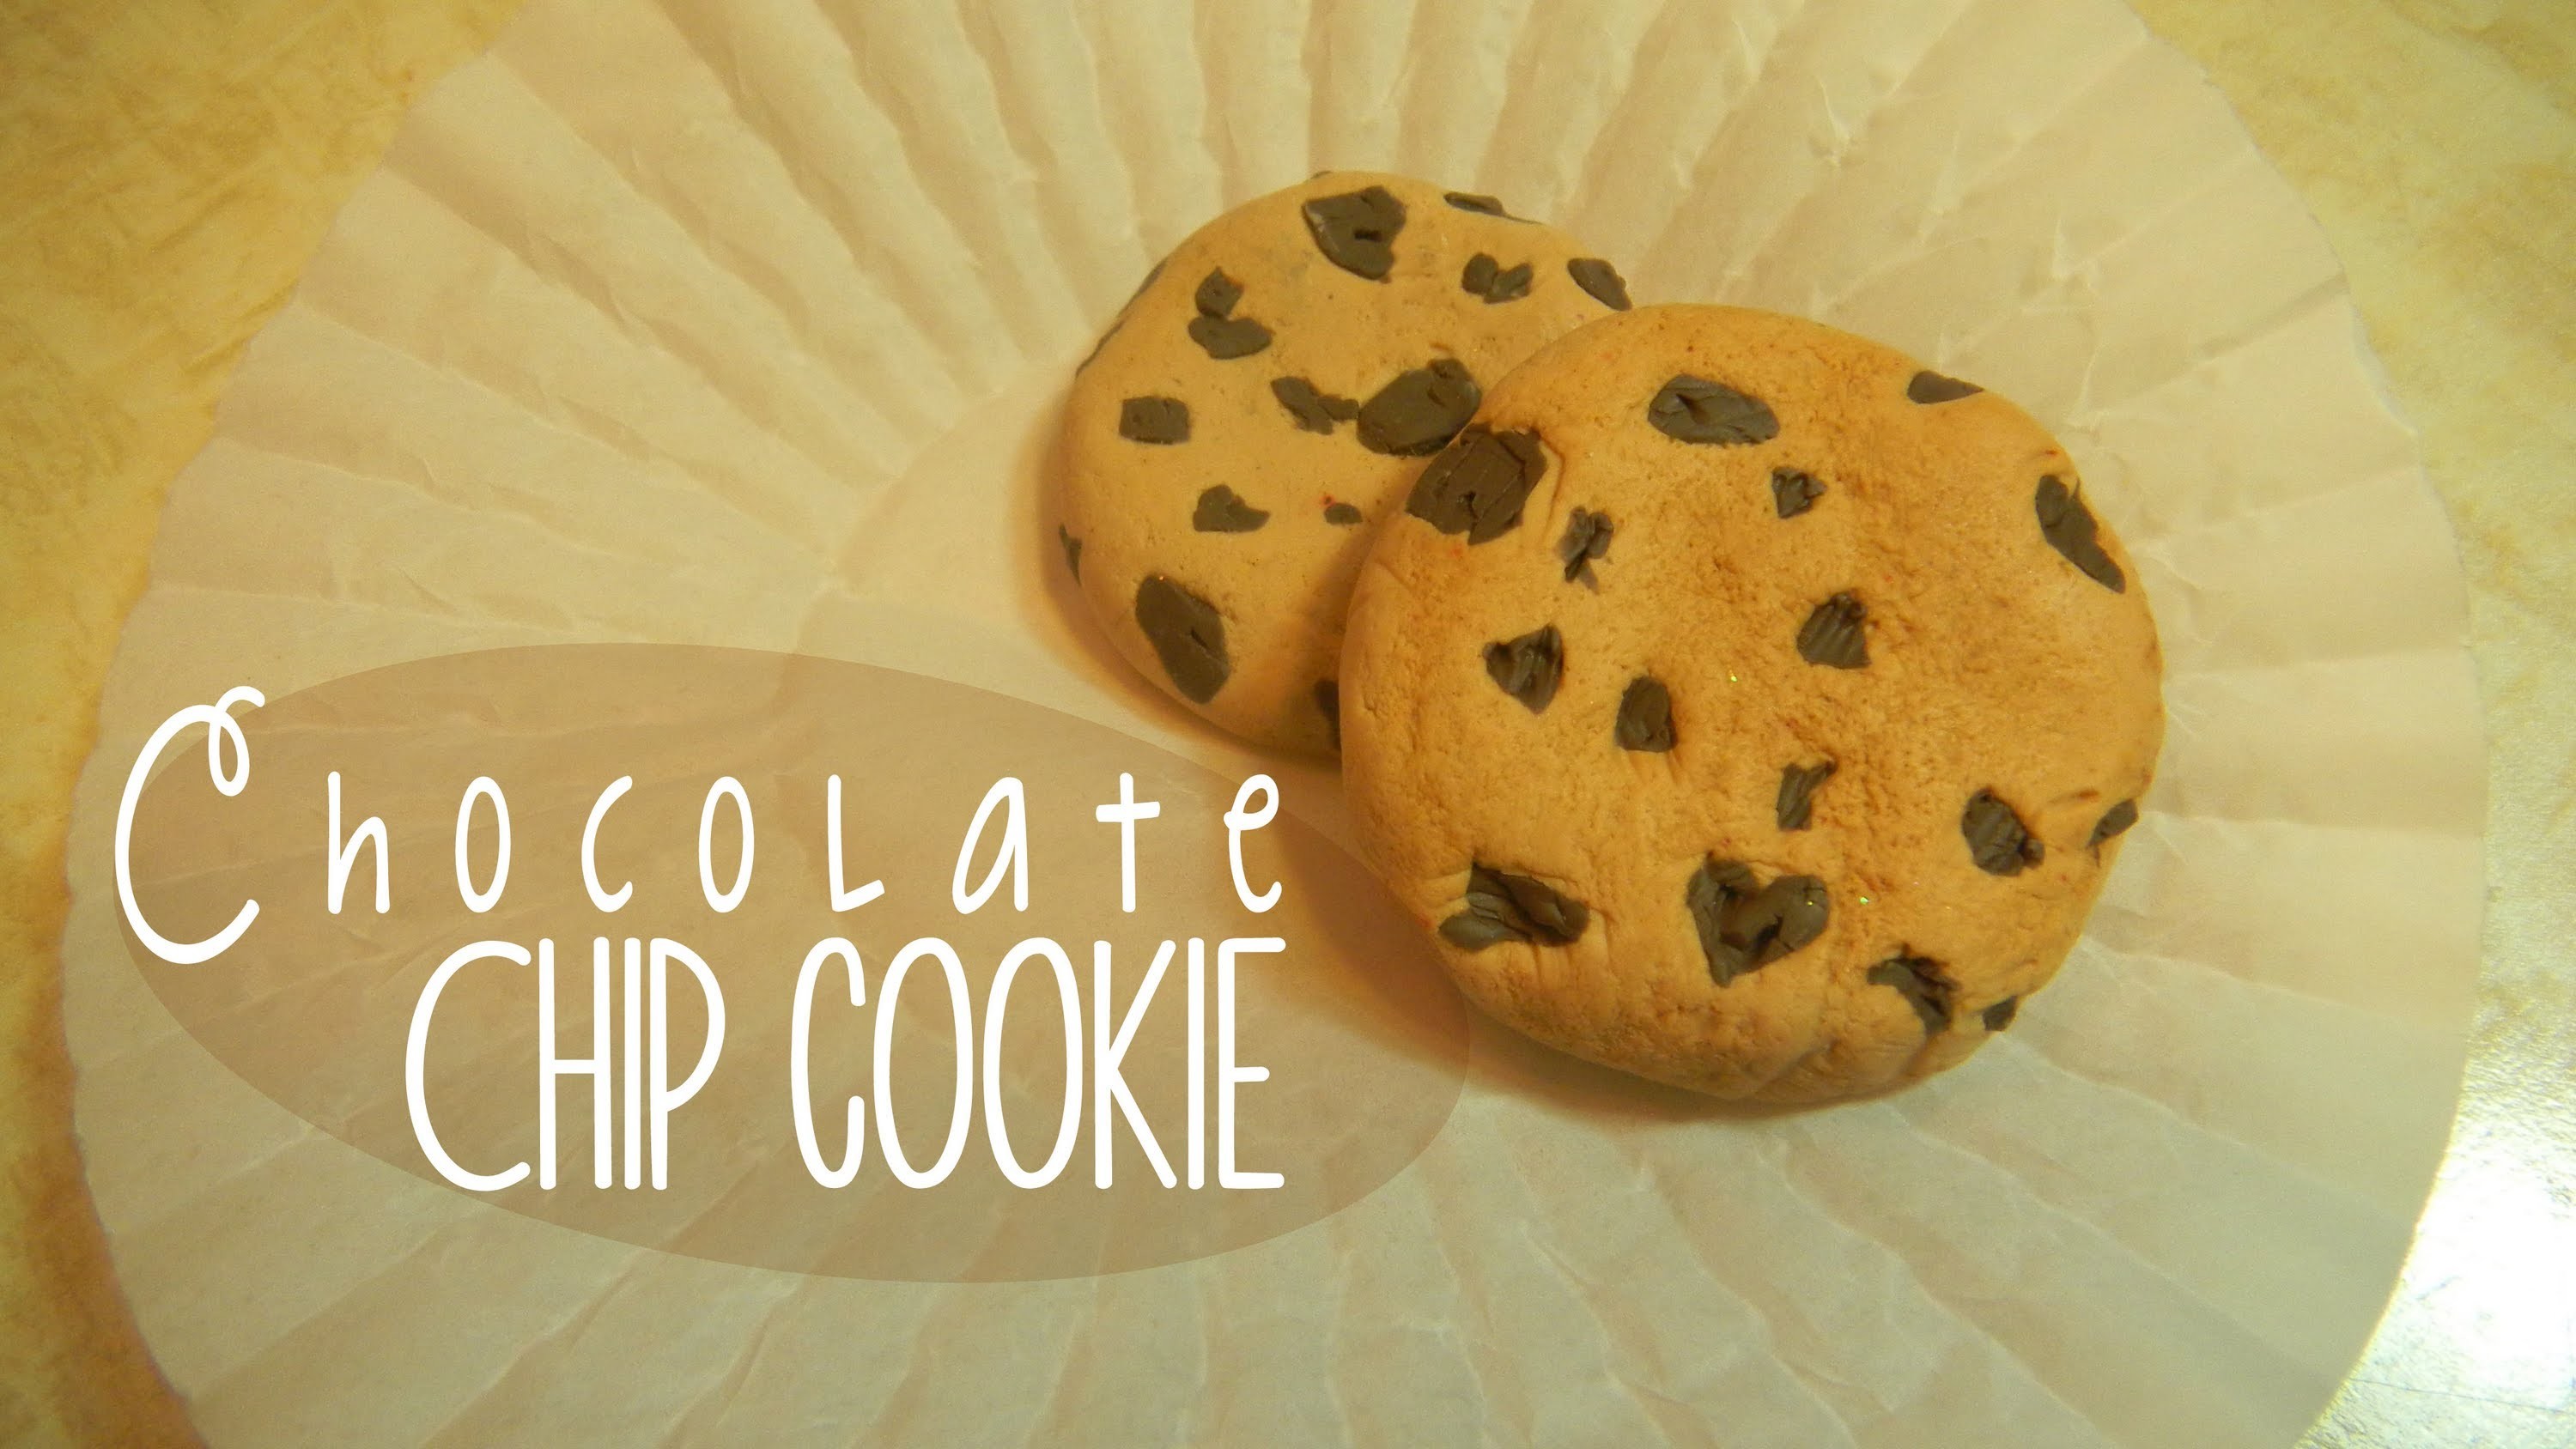 Chocolate Chip Cookie (Tutorial.Arcilla Polimerica)